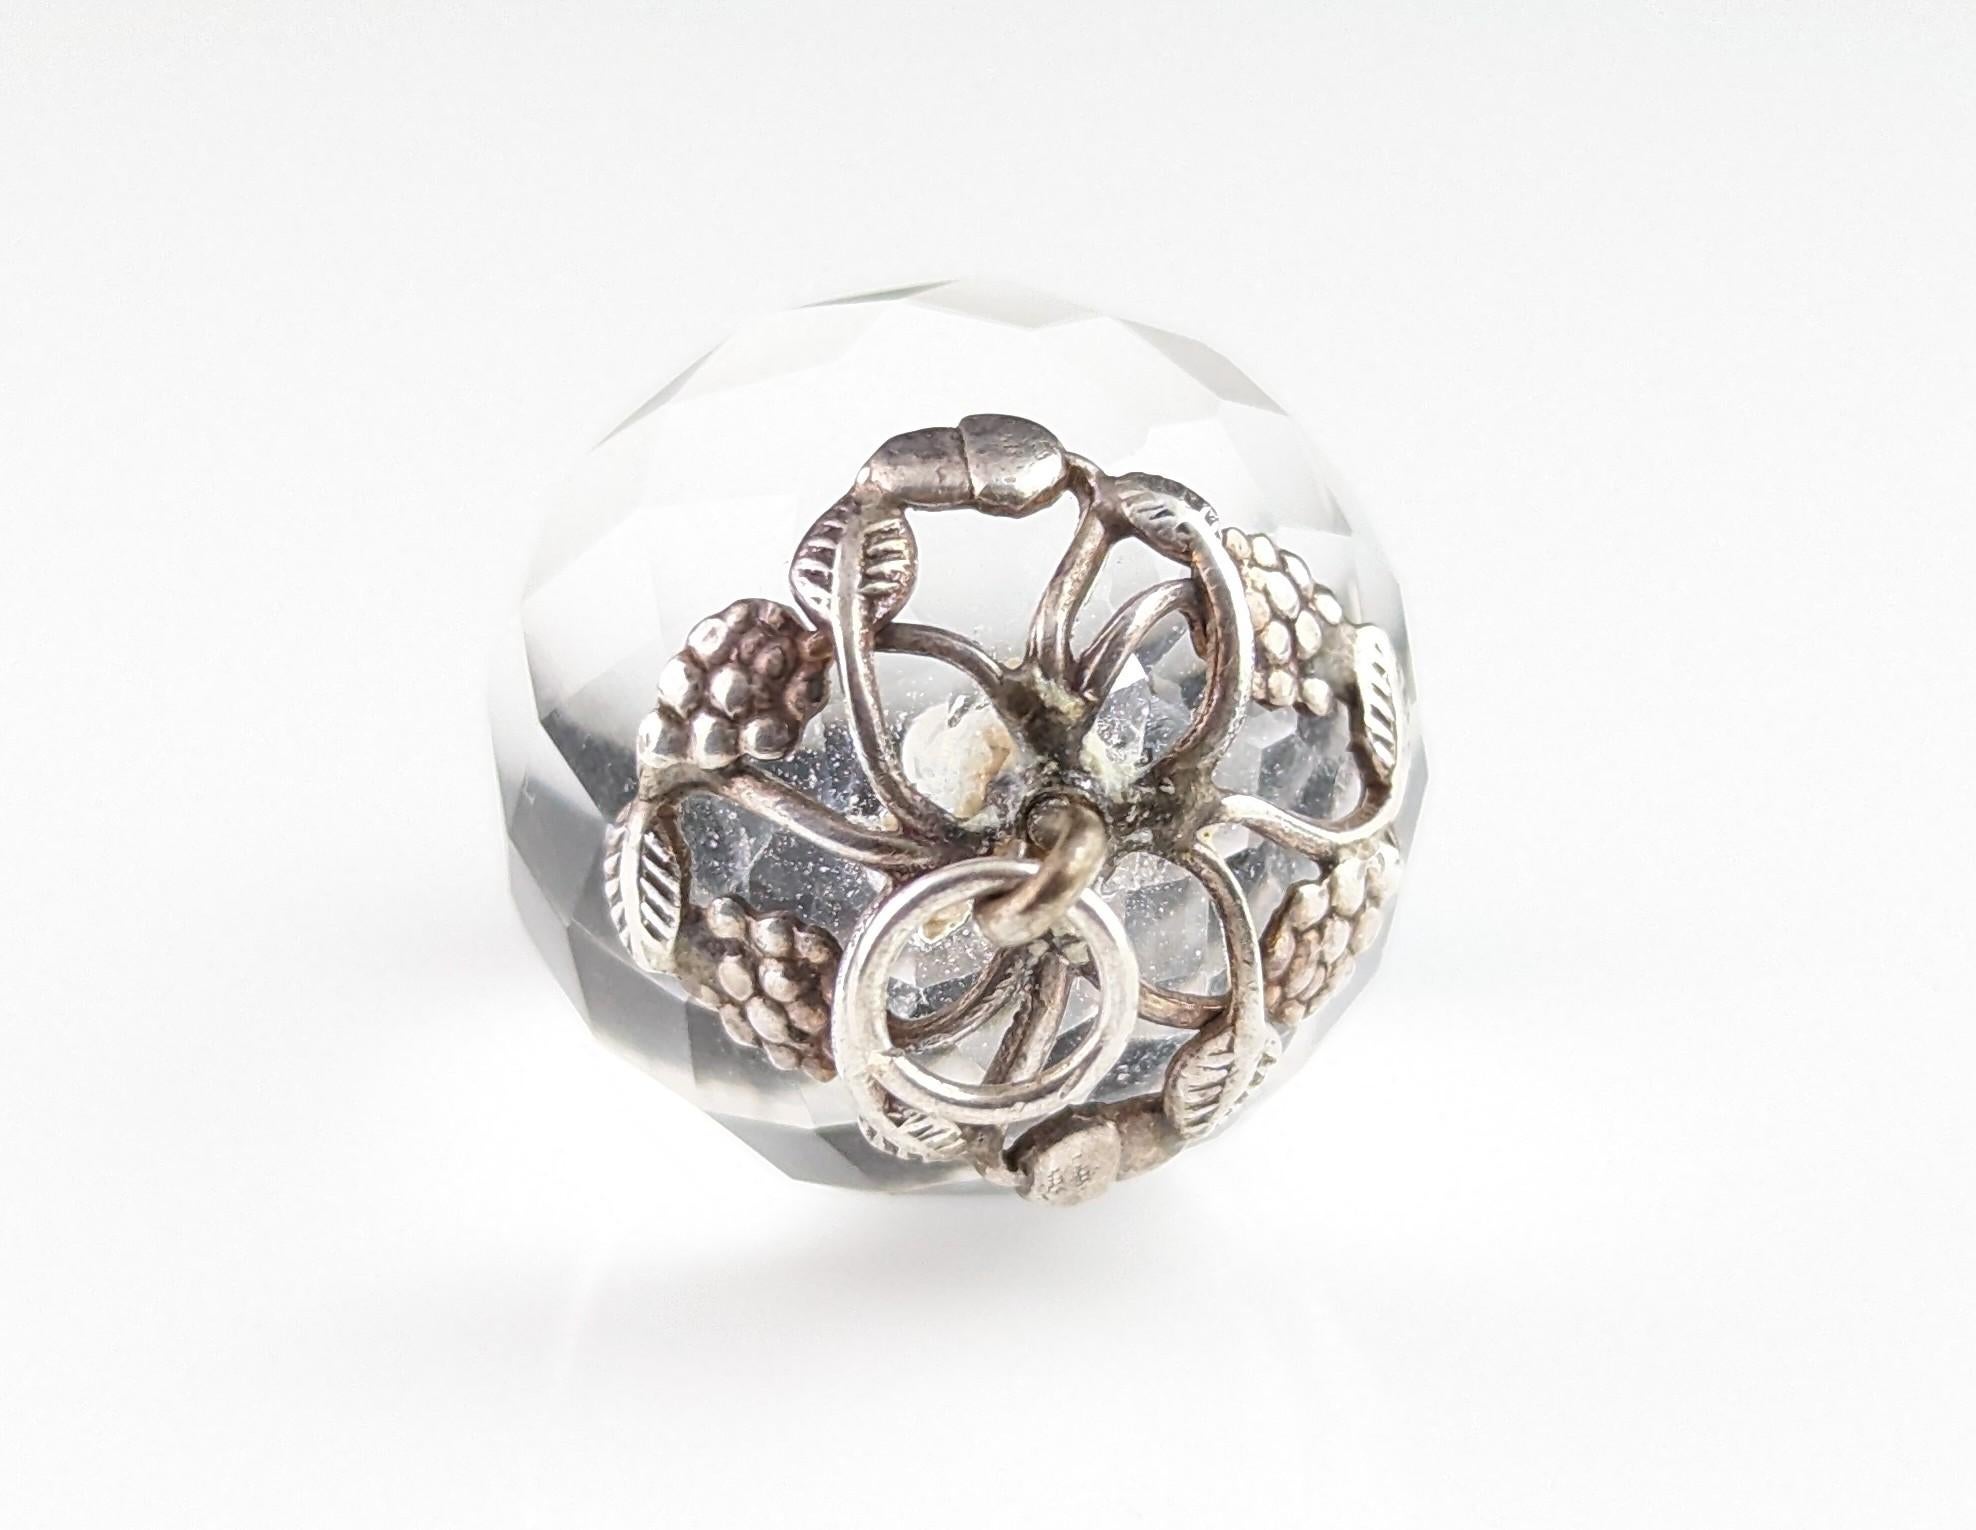 Antique Victorian Rock crystal acorn pendant, sterling silver  6